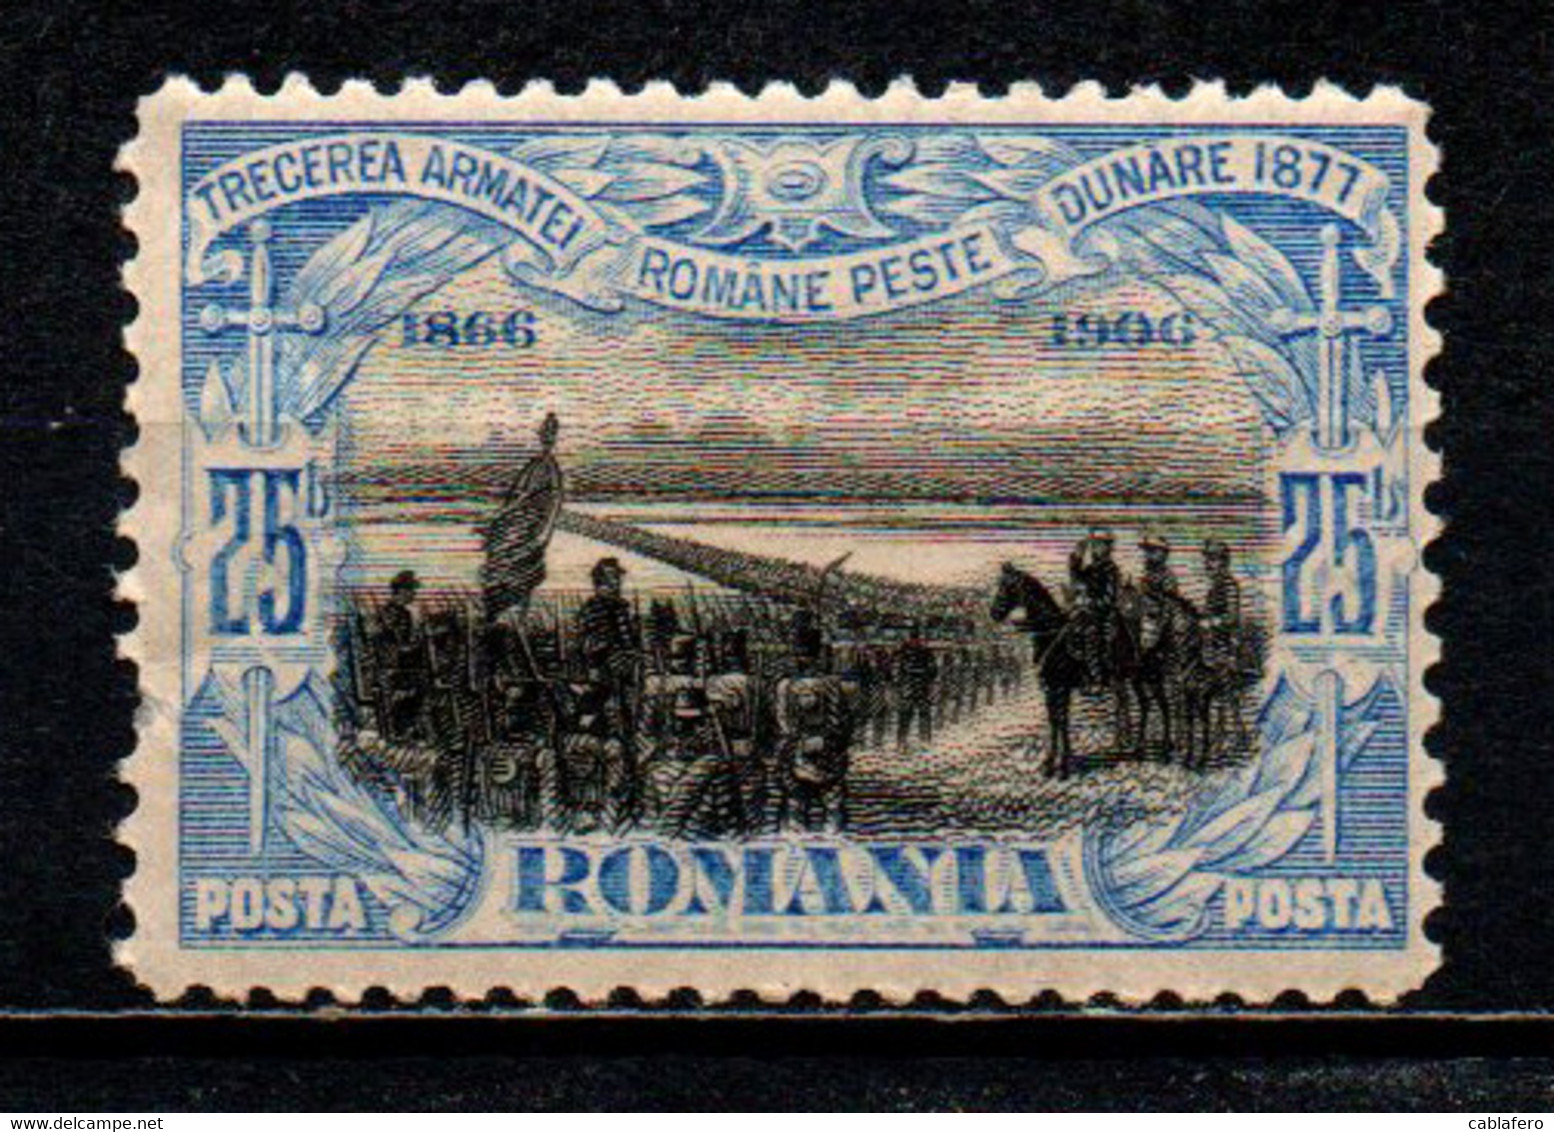 ROMANIA - 1906 - Romanian Army Crossing Danube - MH - Unused Stamps